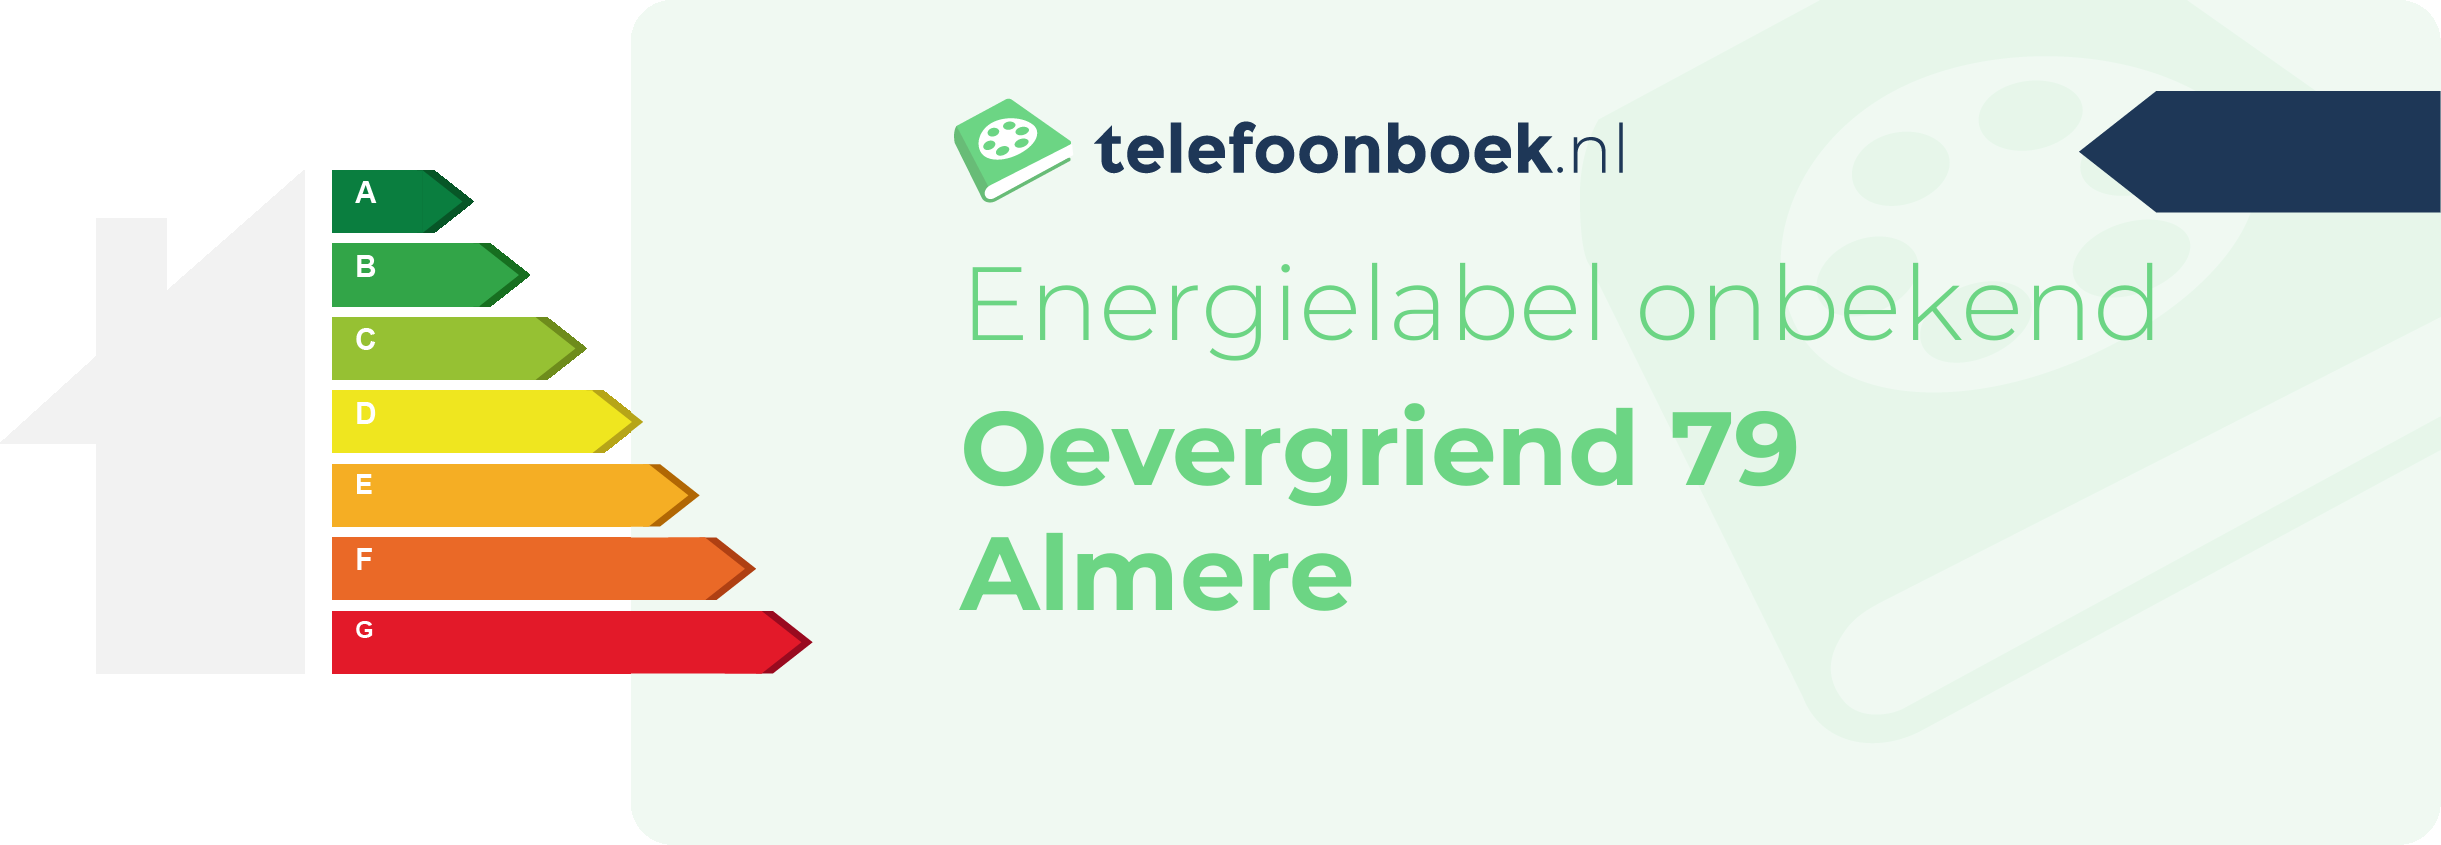 Energielabel Oevergriend 79 Almere